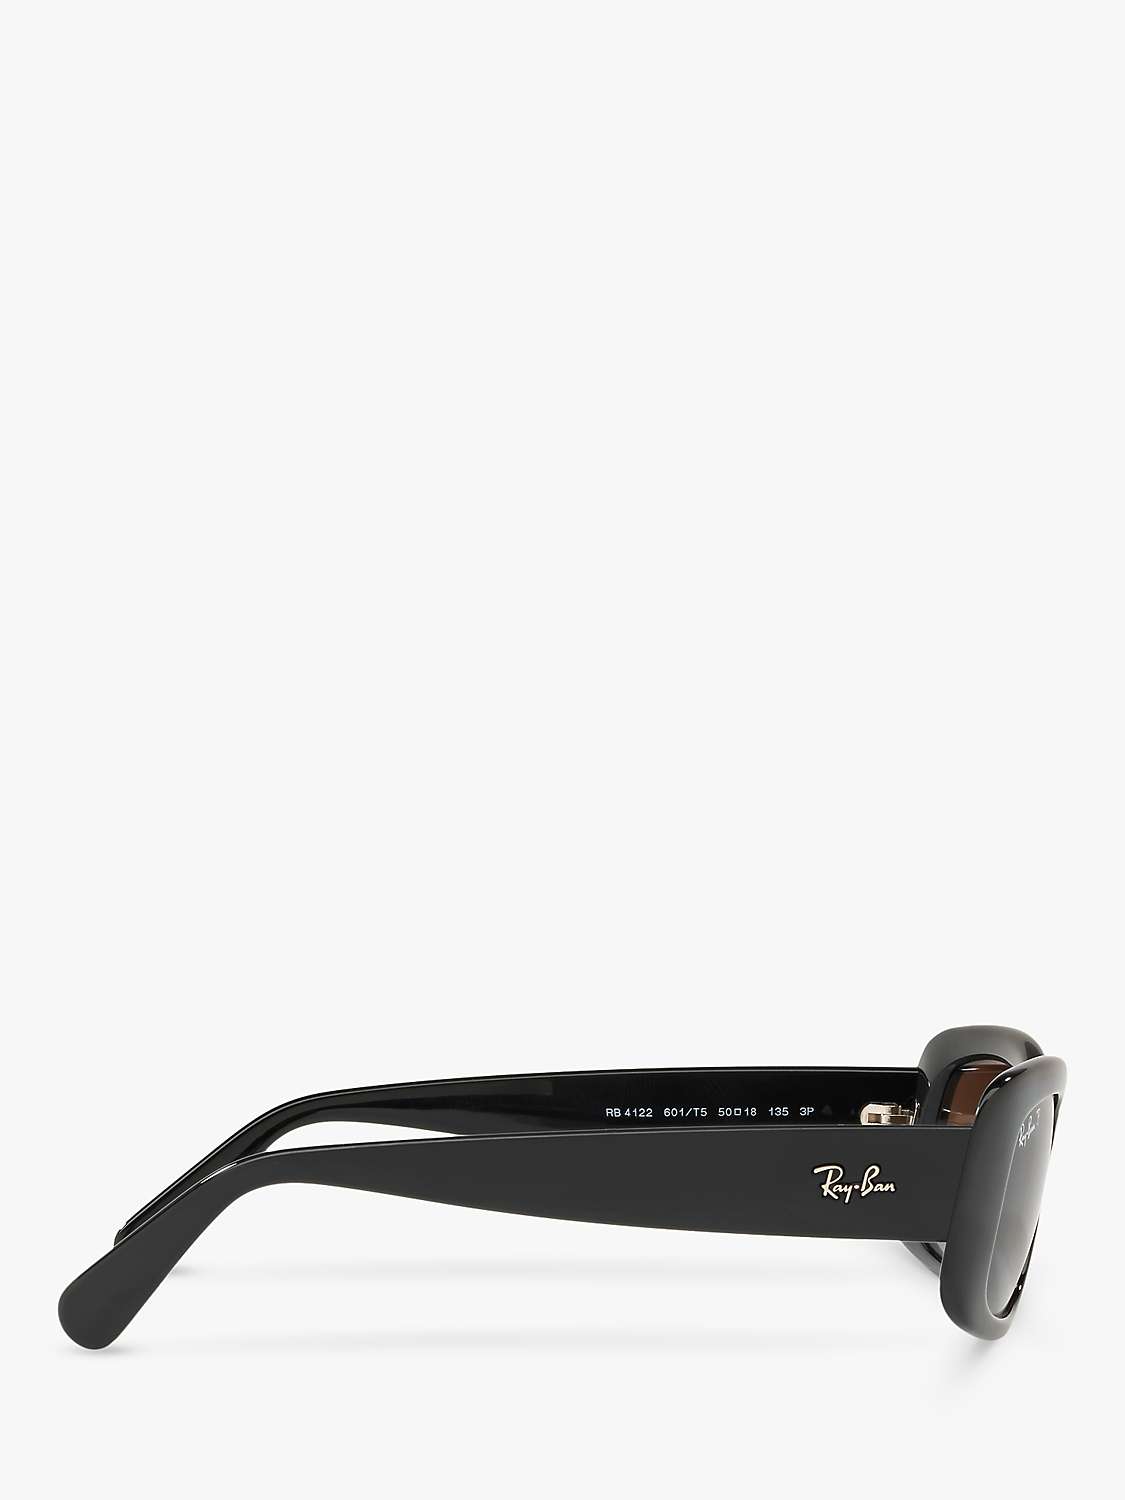 Buy Ray-Ban RB4122 Women's Polarised Rectangular Sunglasses, Black/Brown Gradient Online at johnlewis.com